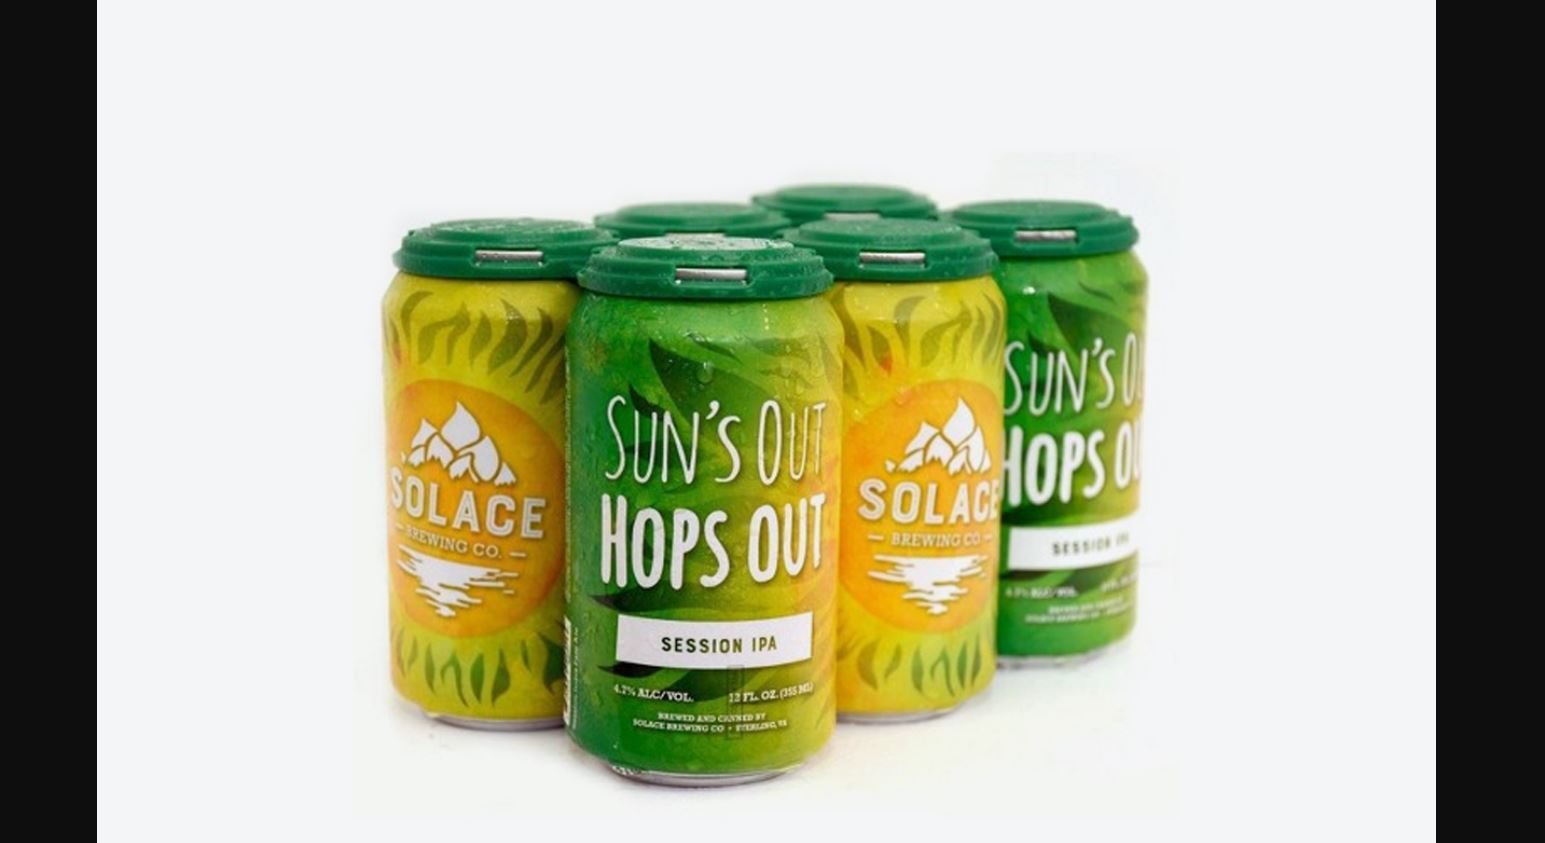 Solace Suns Out Hops Out